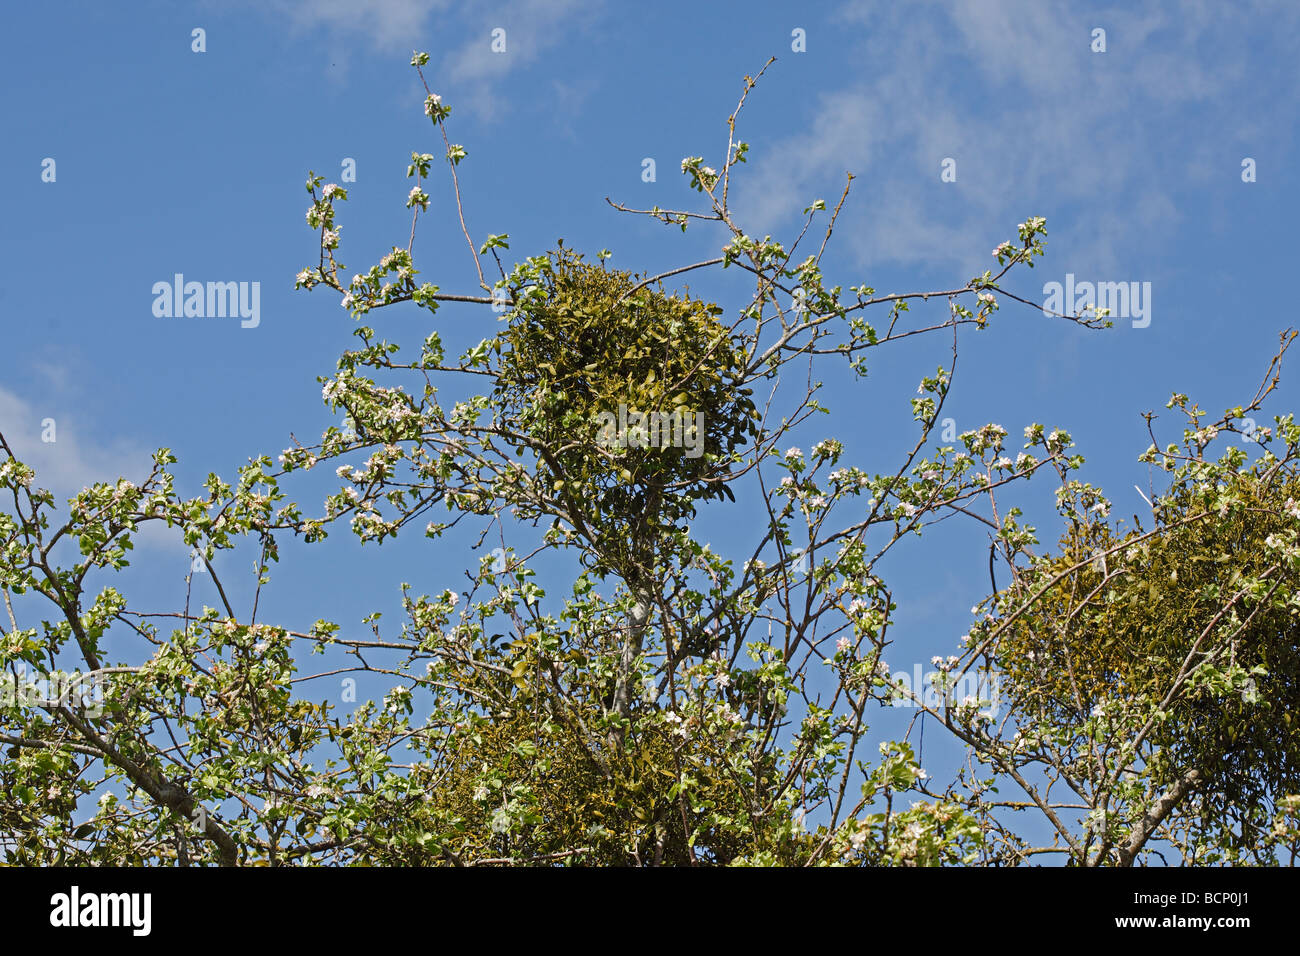 mistletoe Viscum album growing on apple tree Stock Photo